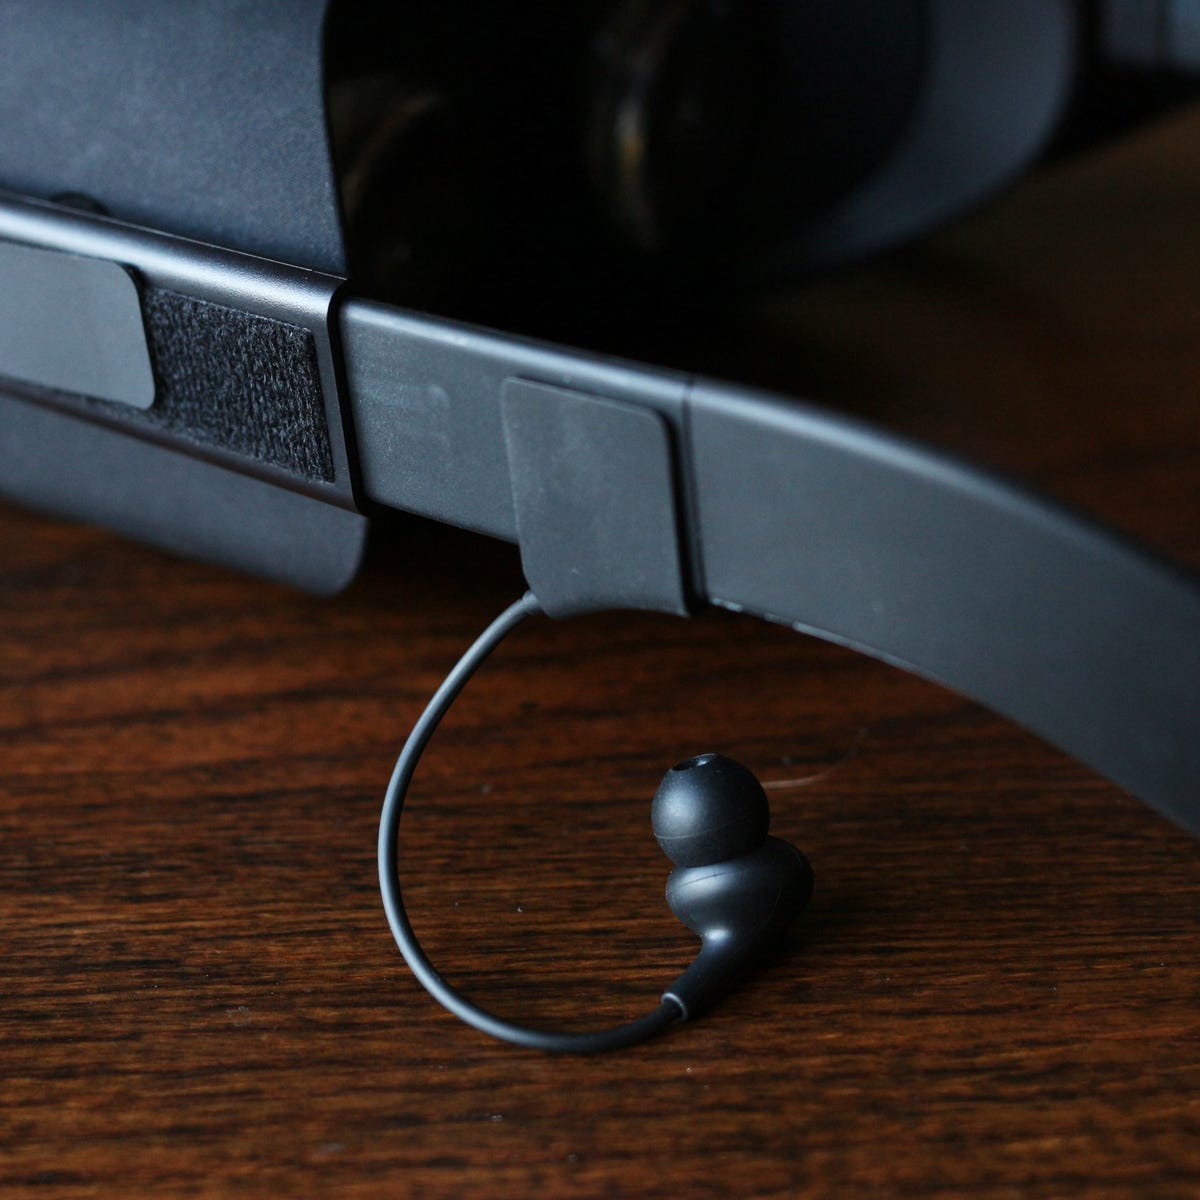 Oculus Rift Earphones review: $49 Oculus Earphones aren't phenomenal - CNET